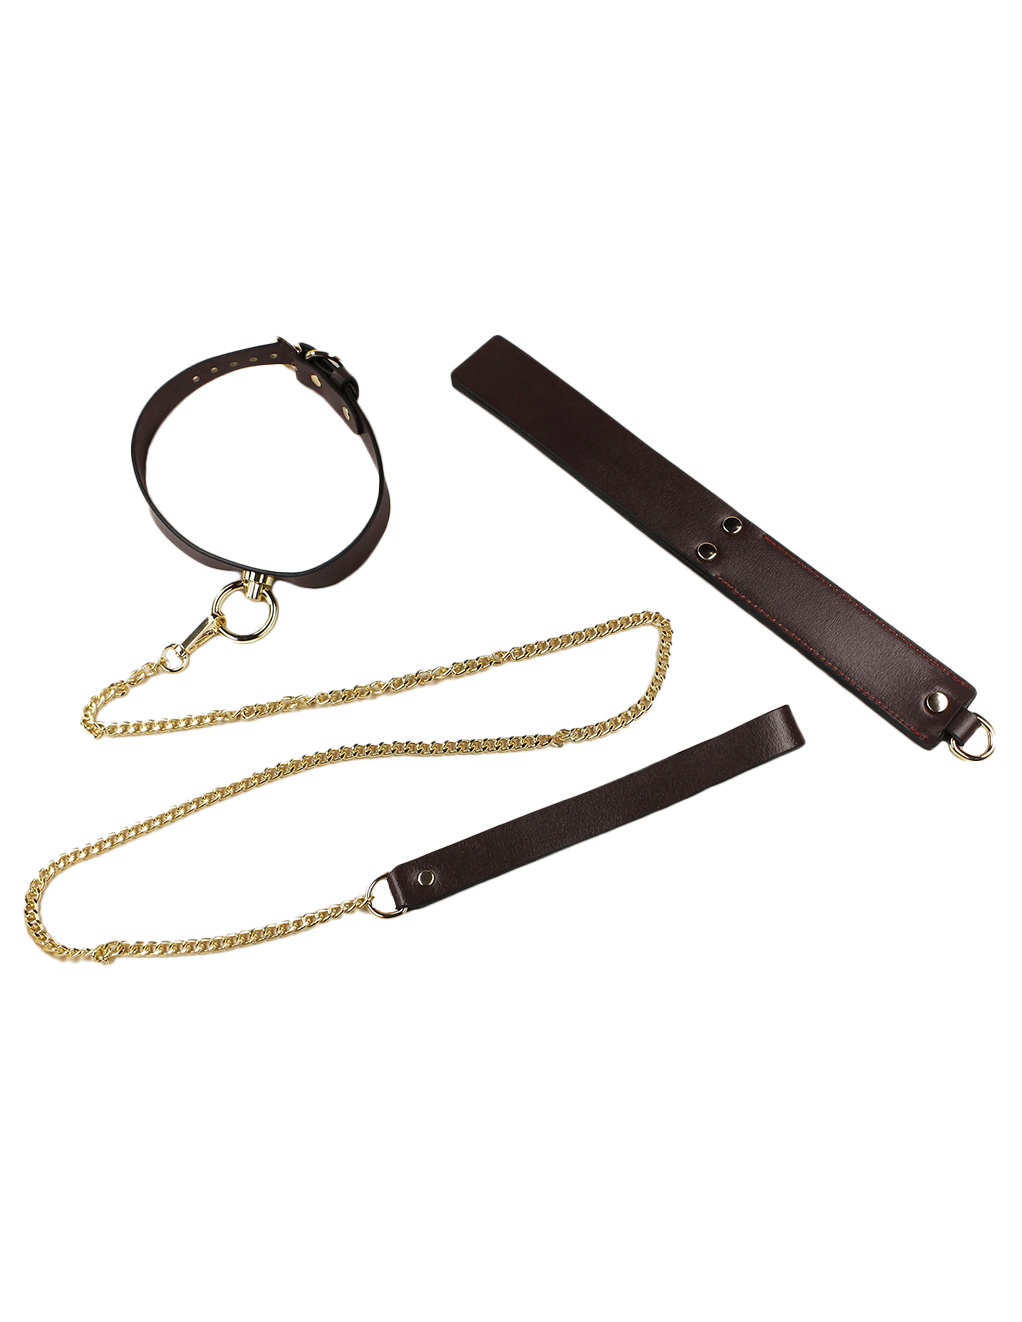 Edonista Venice Brown & Gold 13pc Bondage Set - Collar, Leash and Spanking Paddle